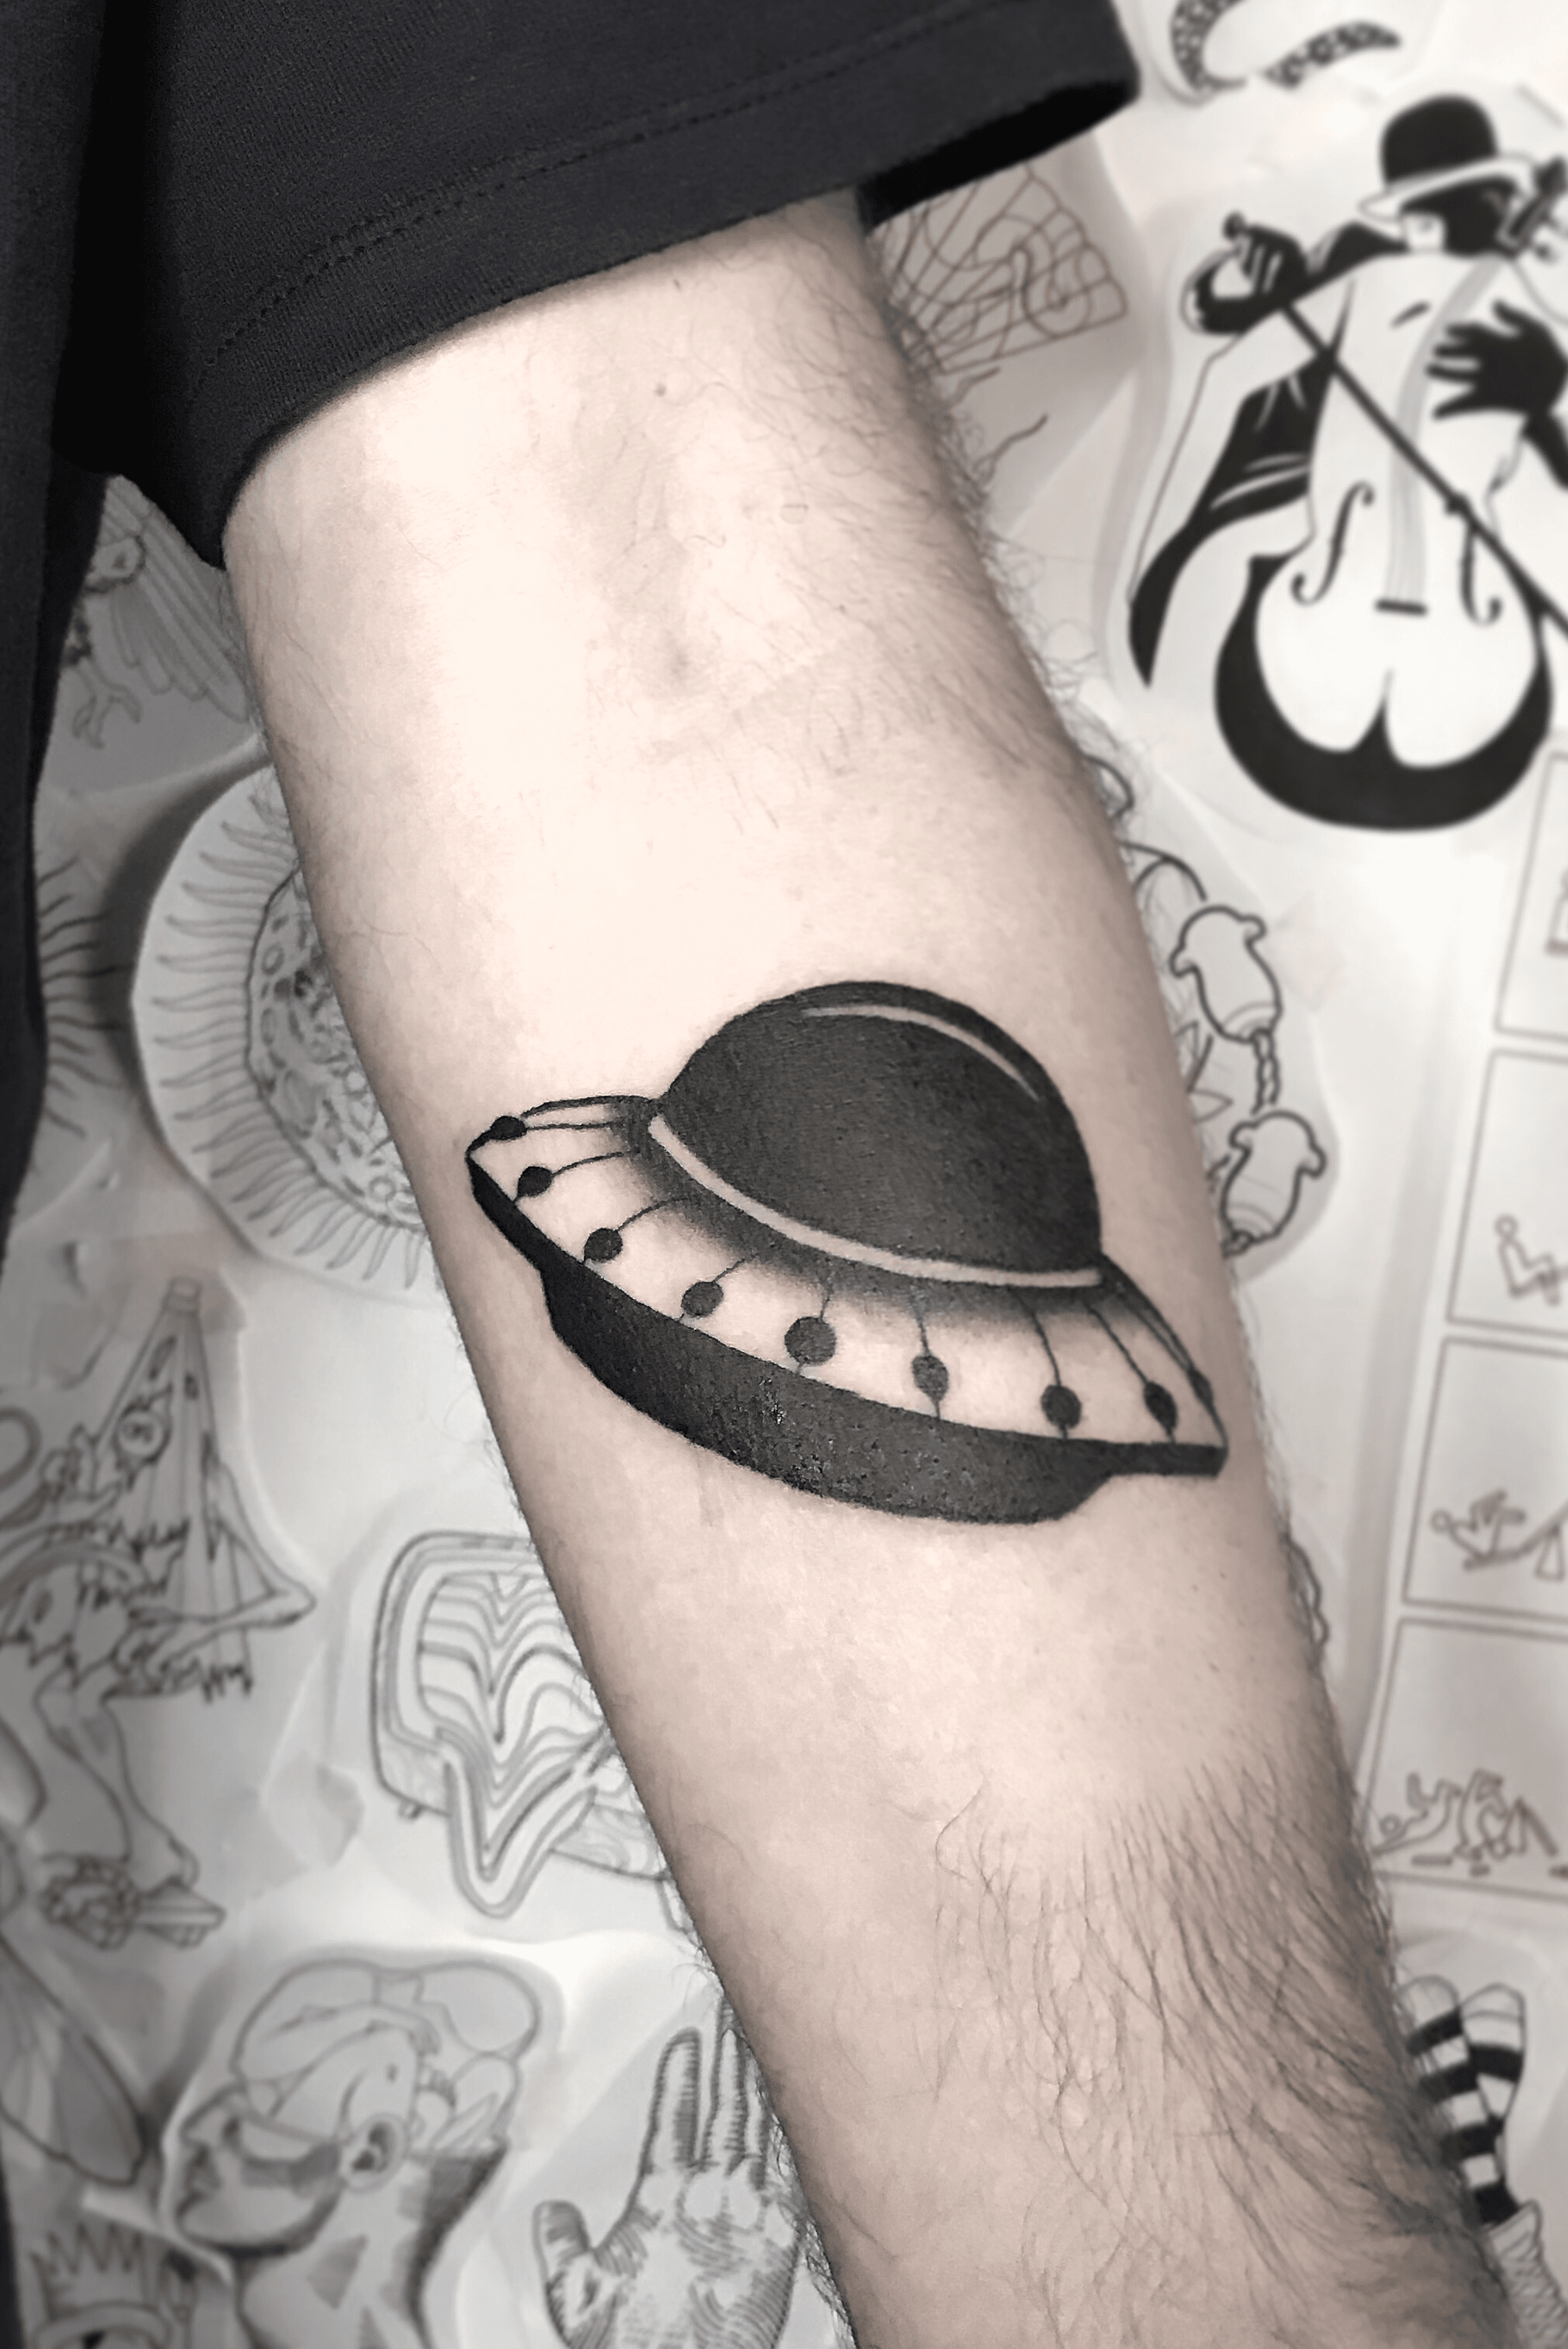 Tattoo uploaded by Tom Sasson • #alien #spaceship #ufo #blackwork #arm  #shading #outline • Tattoodo